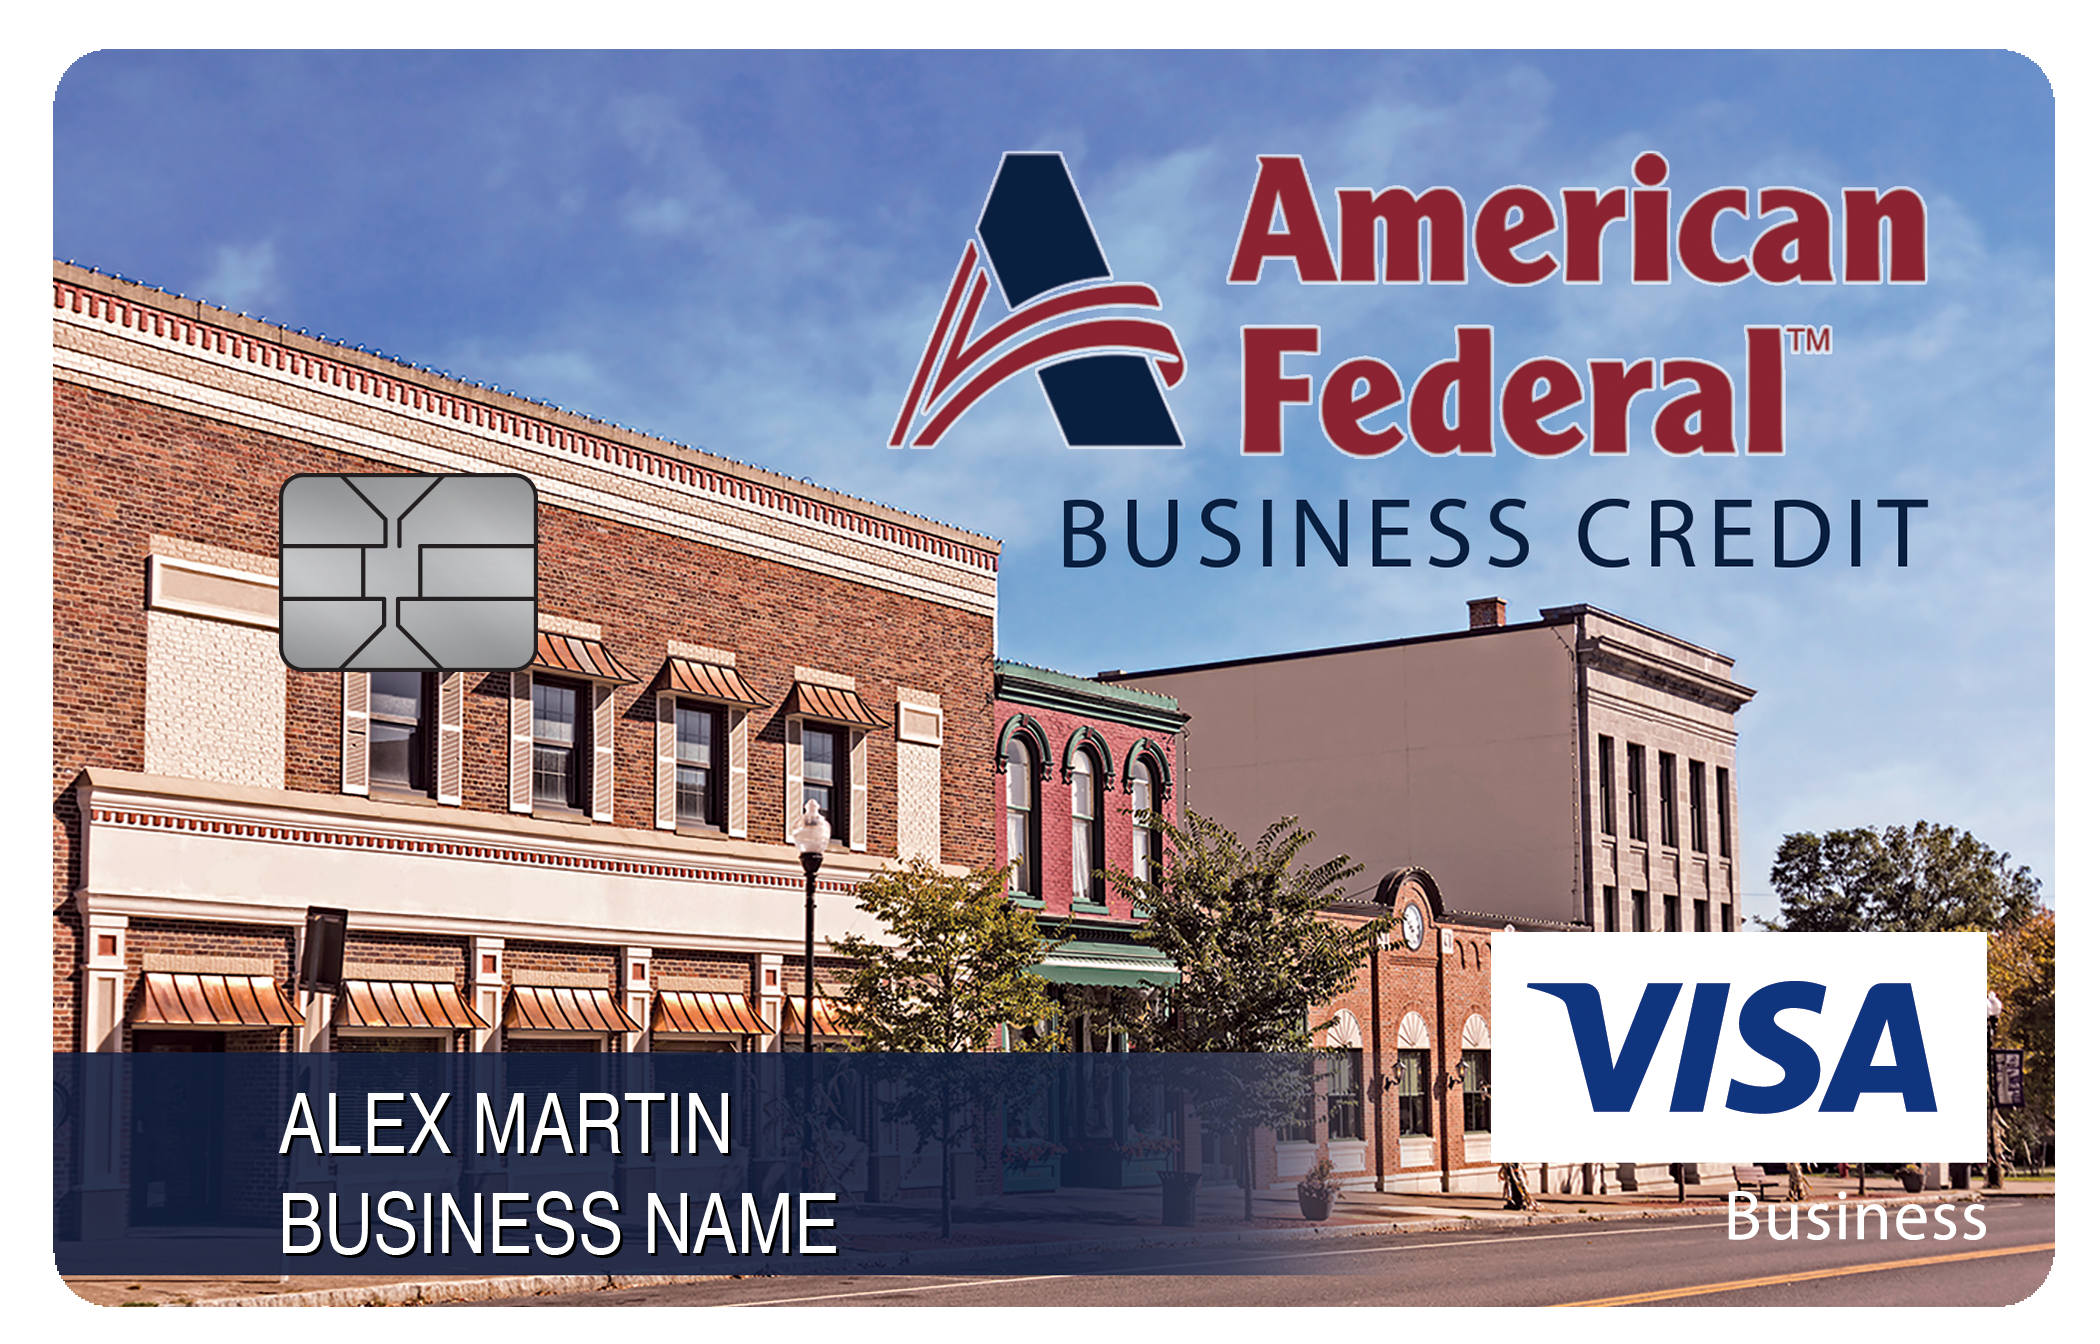 American Federal Bank